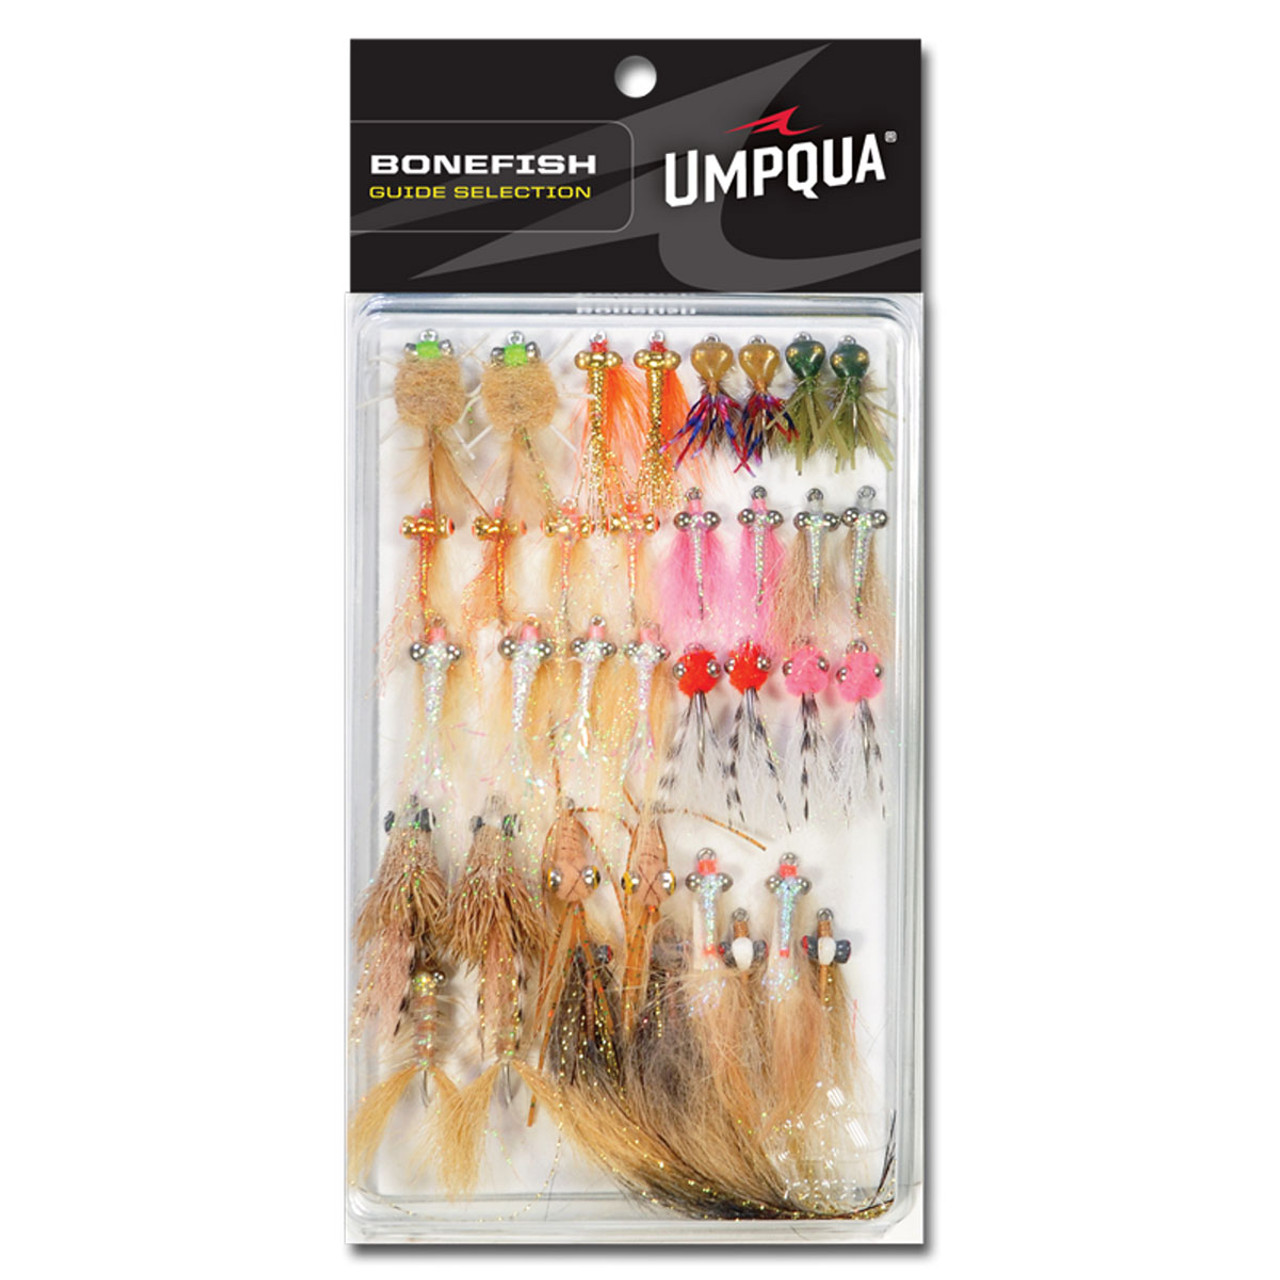 Umpqua - Bonefish Guide Selection